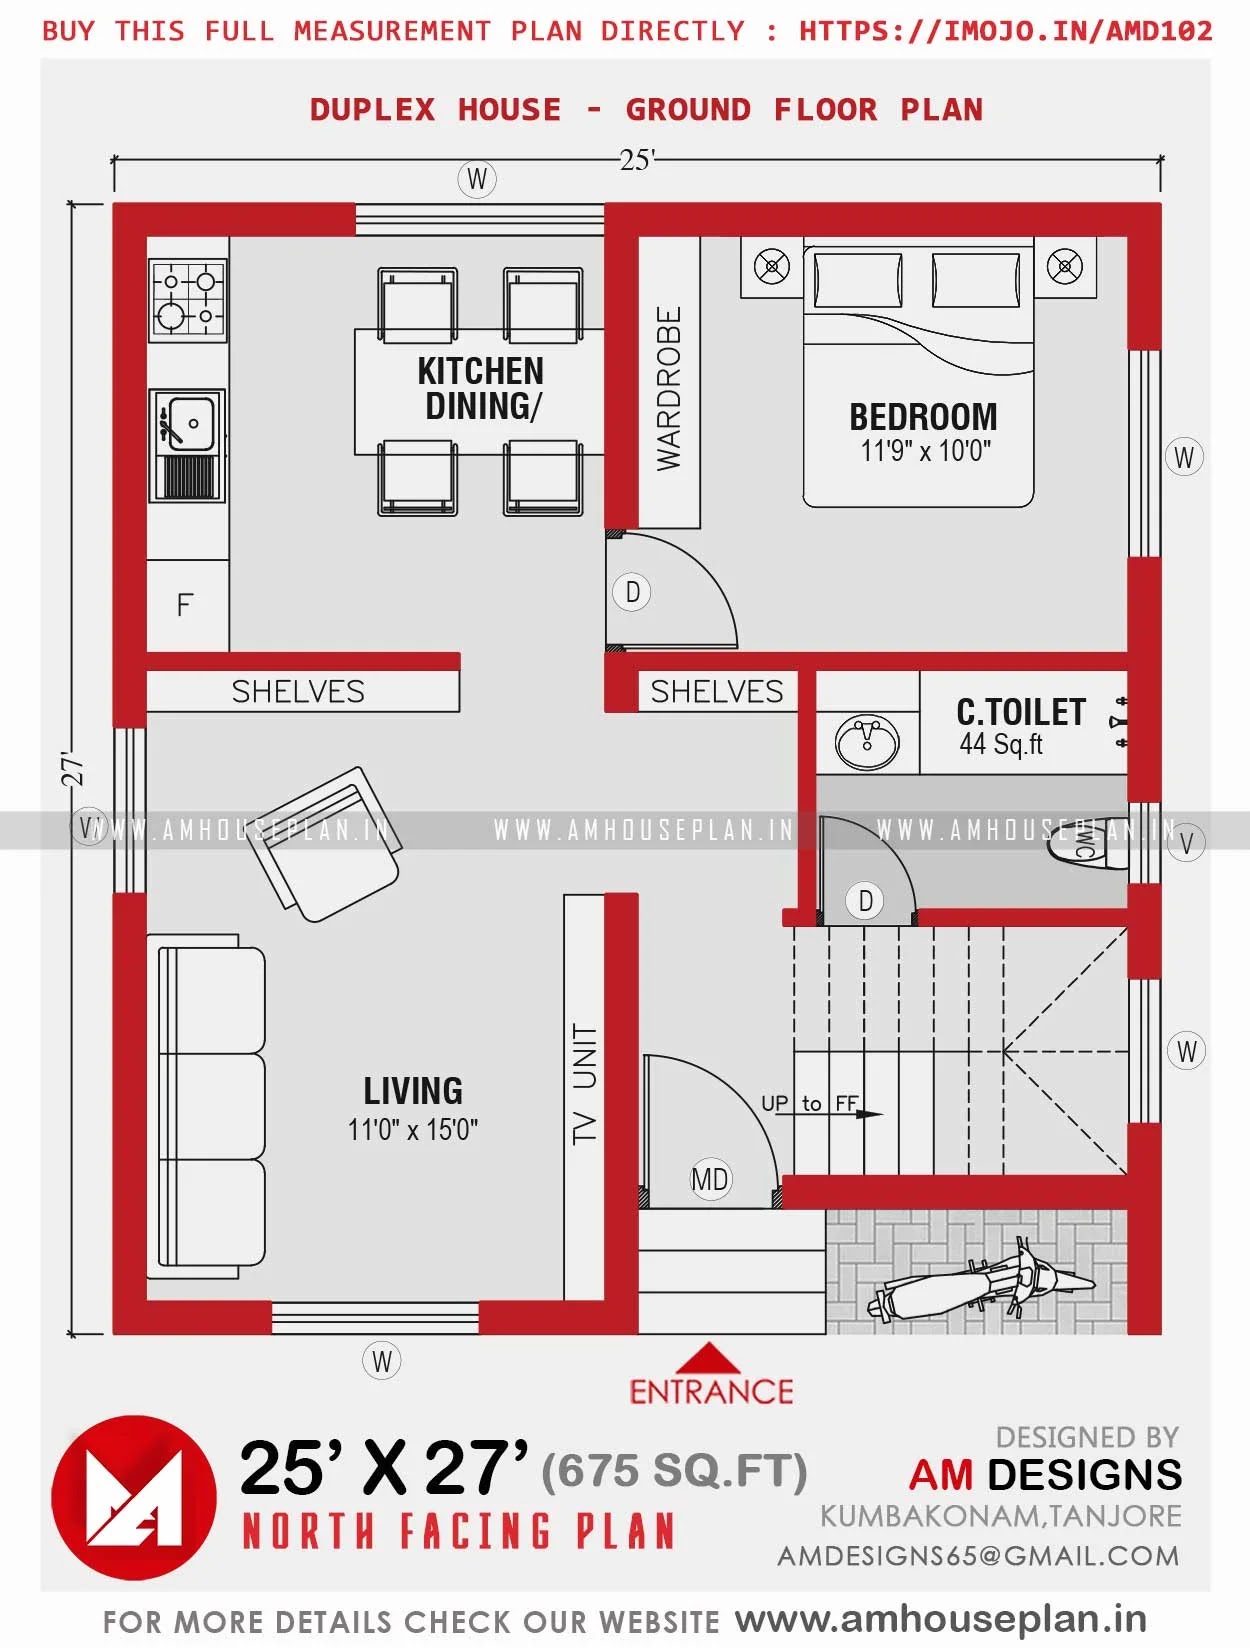 25 x 27 Duplex house floor plan with cost